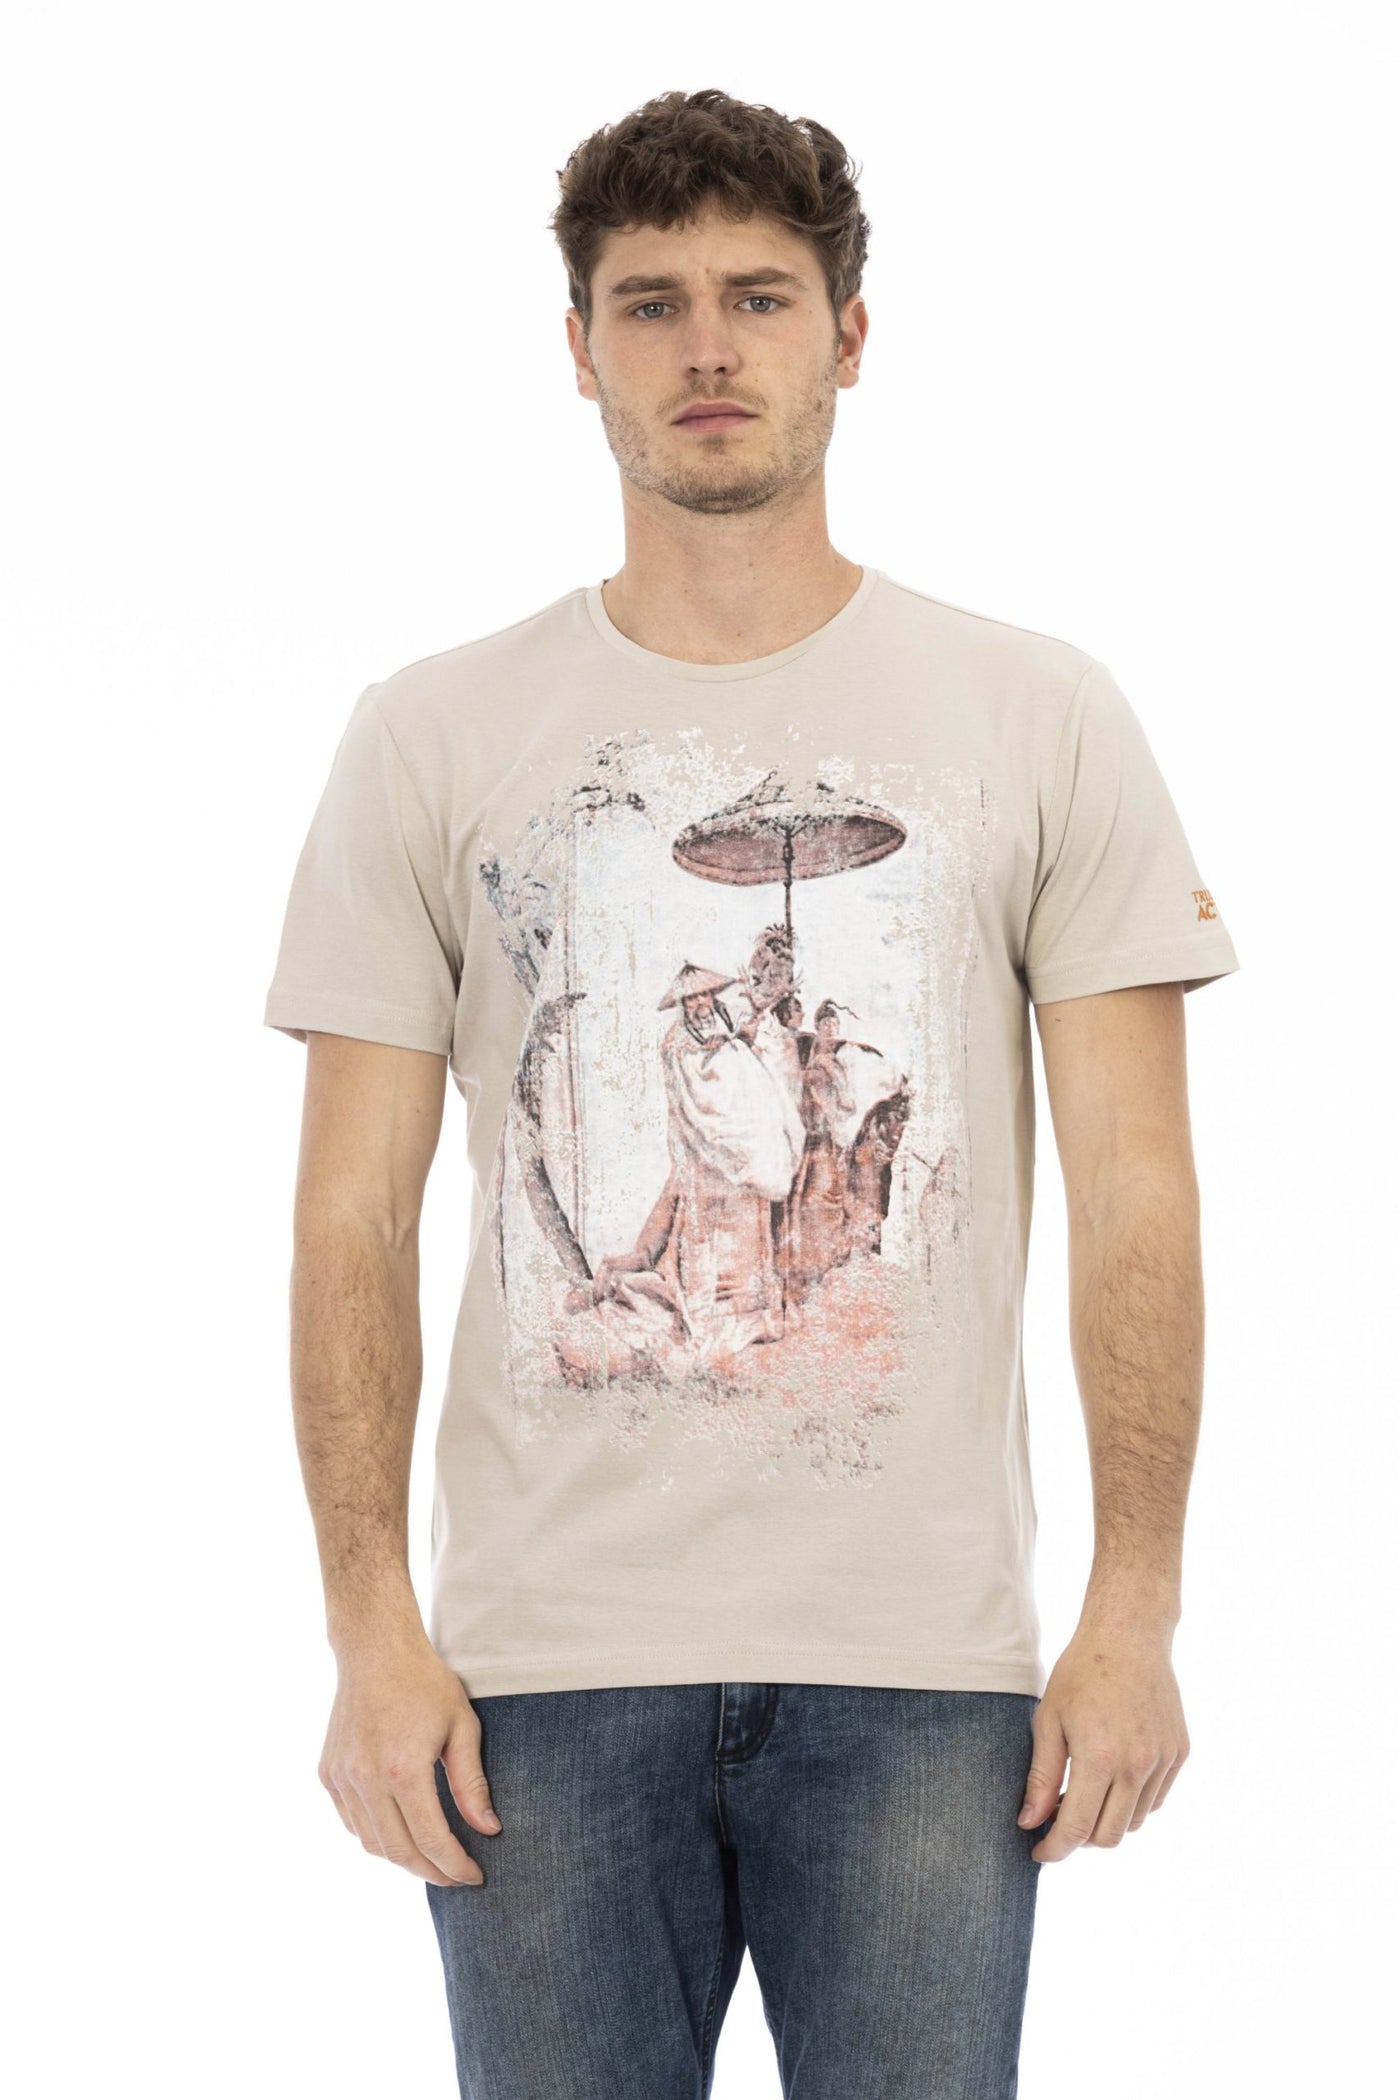 Trussardi Action Beige Cotton T-Shirt